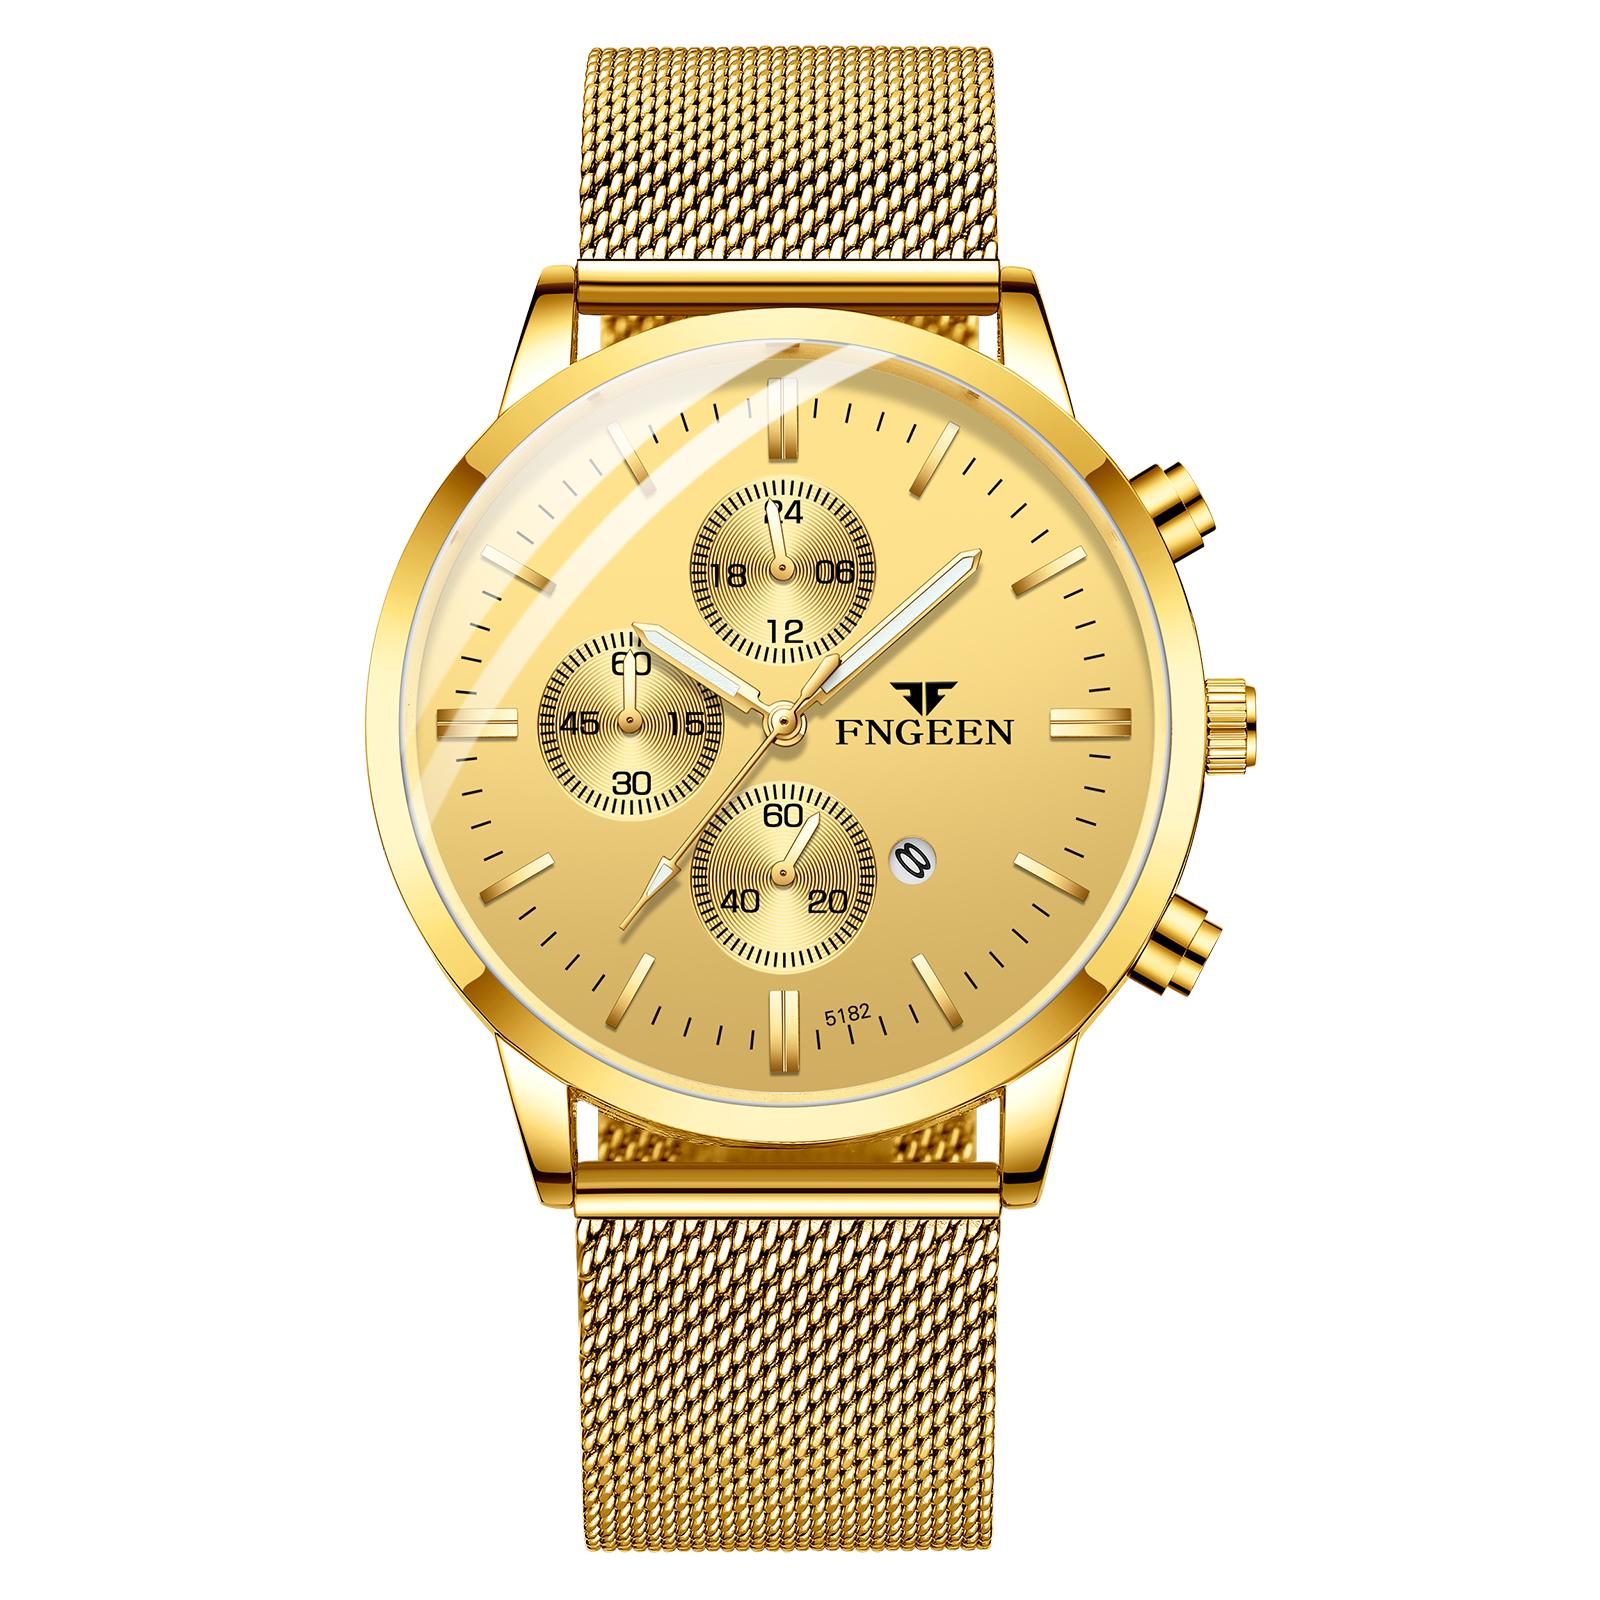 Изображение товара: Relogios Masculino Brand Luxury Men's Watch Stainless Steel Mesh Watch Men Casual Quartz Watches Male Date Luminous Chronograph